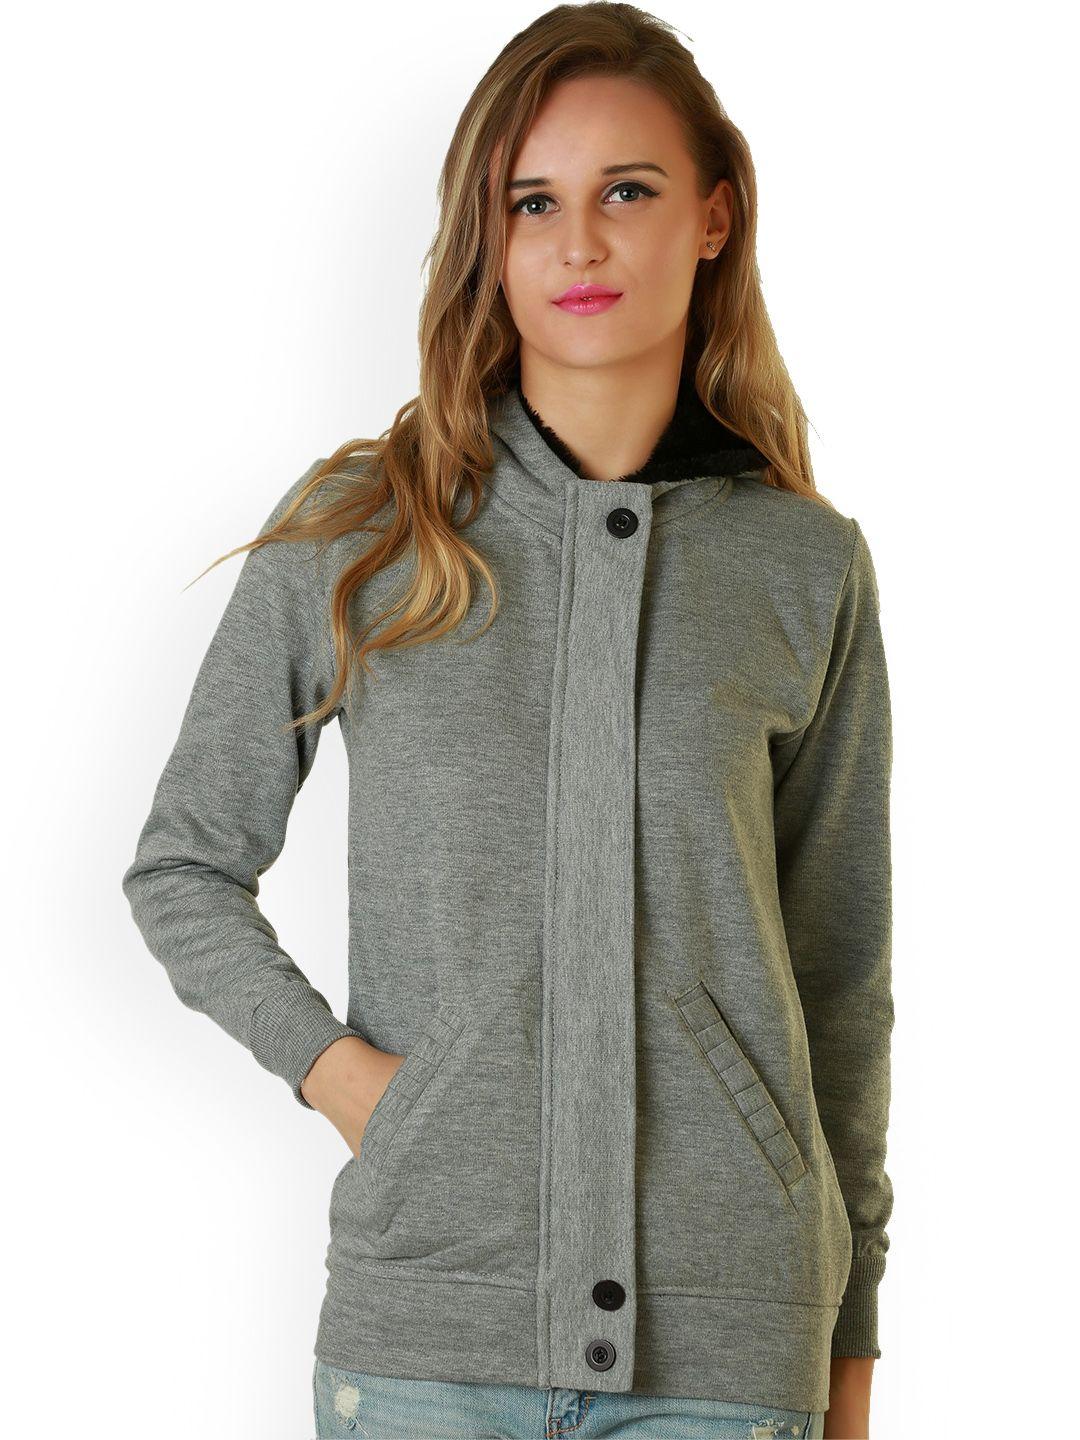 baesd hooded fleece lightweight open front jacket